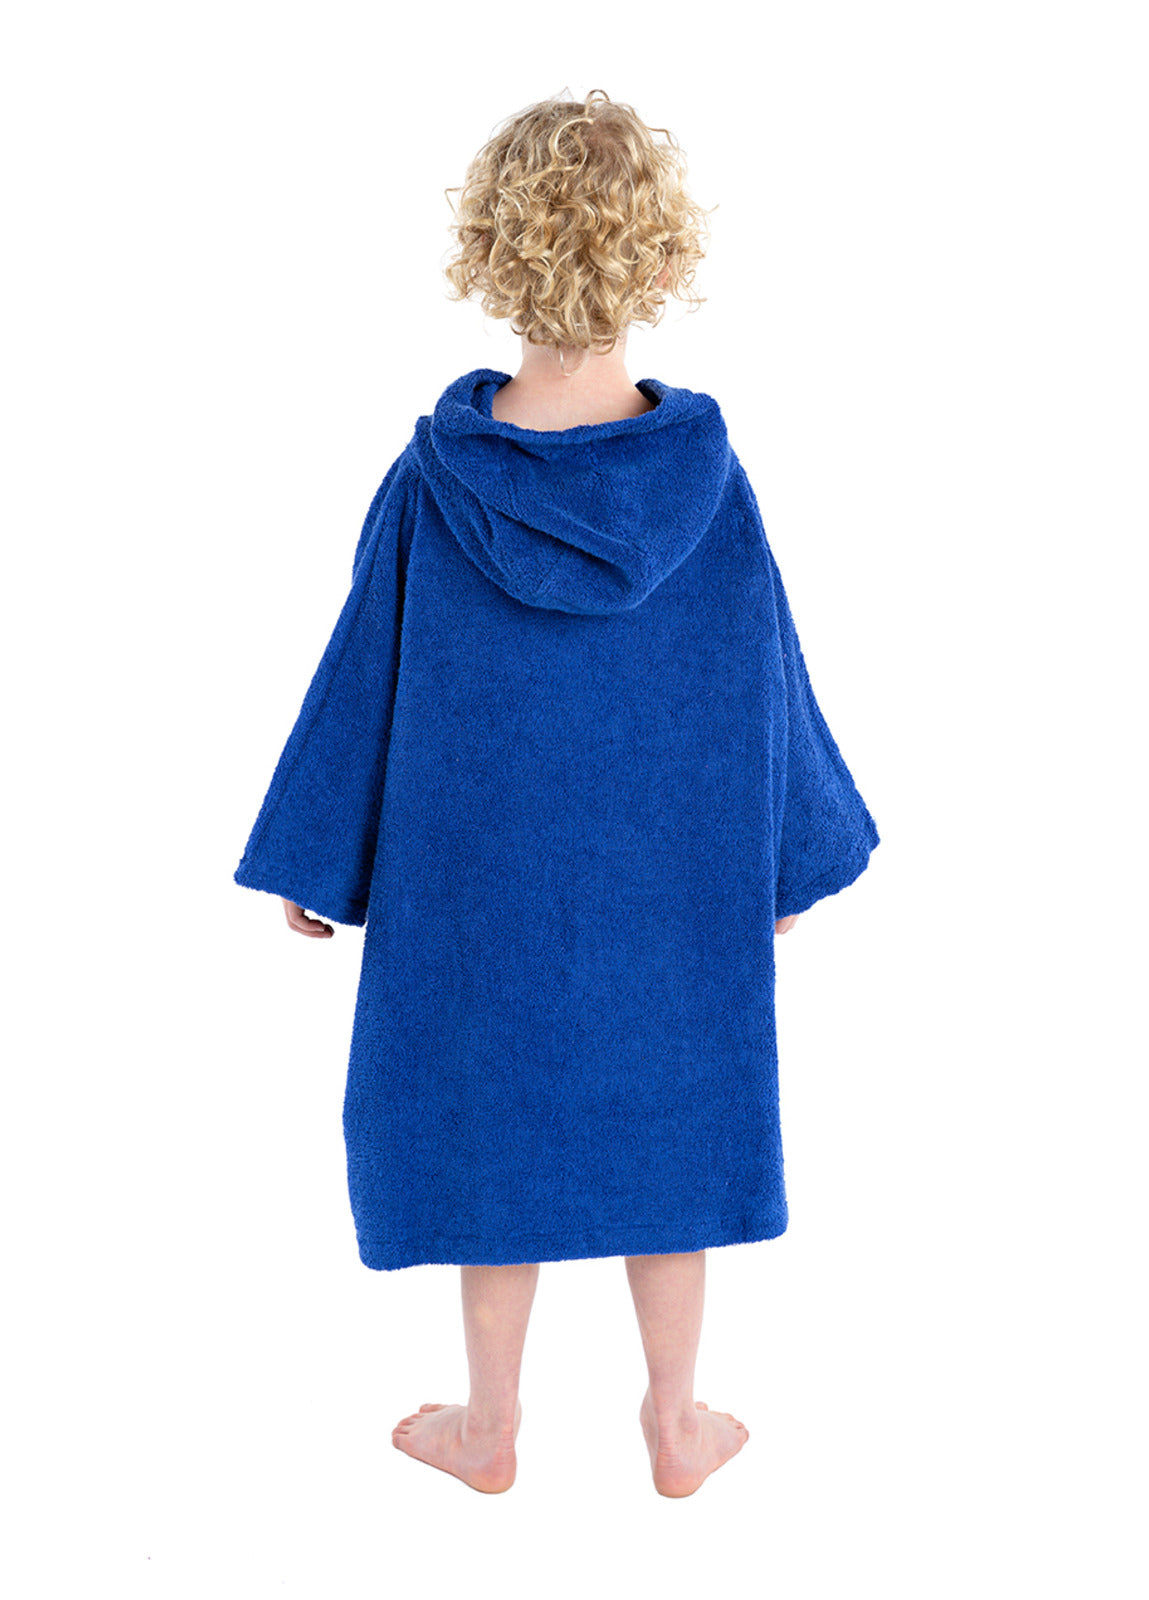 Dryrobe Kids Organic Towel dryrobe - Royal Blue